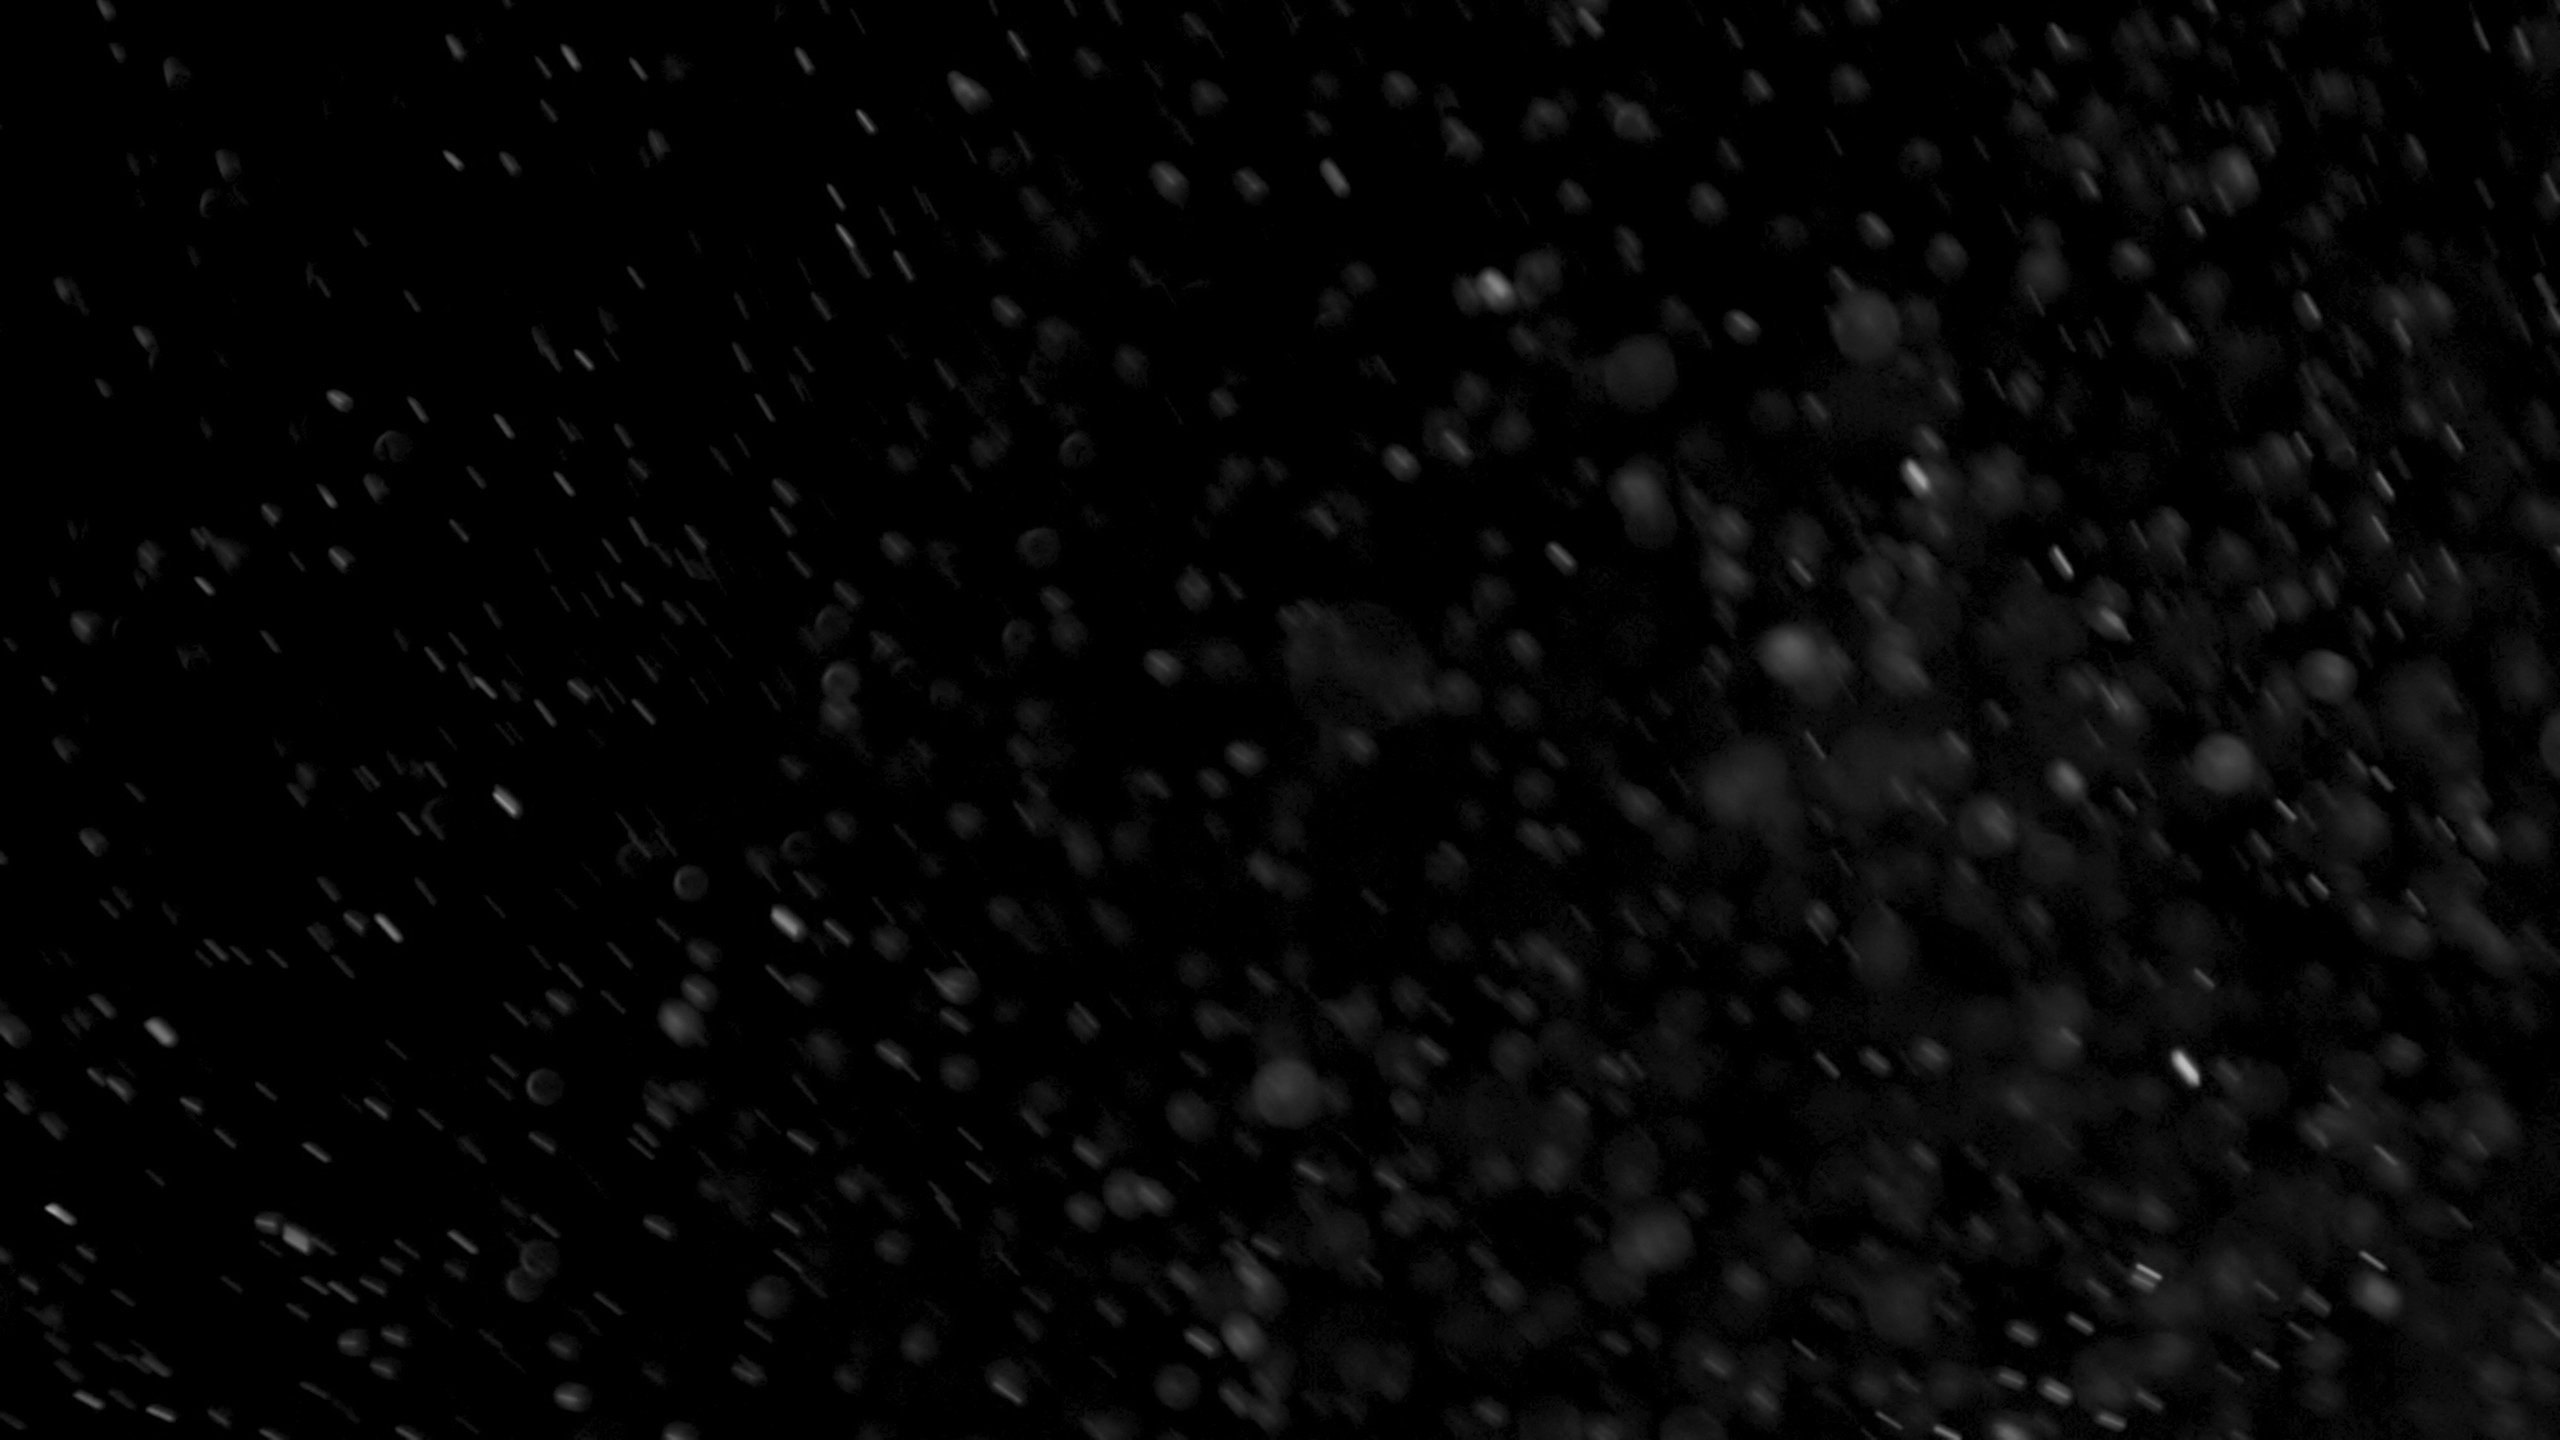 Particle rain. Снег на черном фоне для фотошопа. Текстура снега на черном фоне. Падающий снег на черном фоне. Эффект снега.